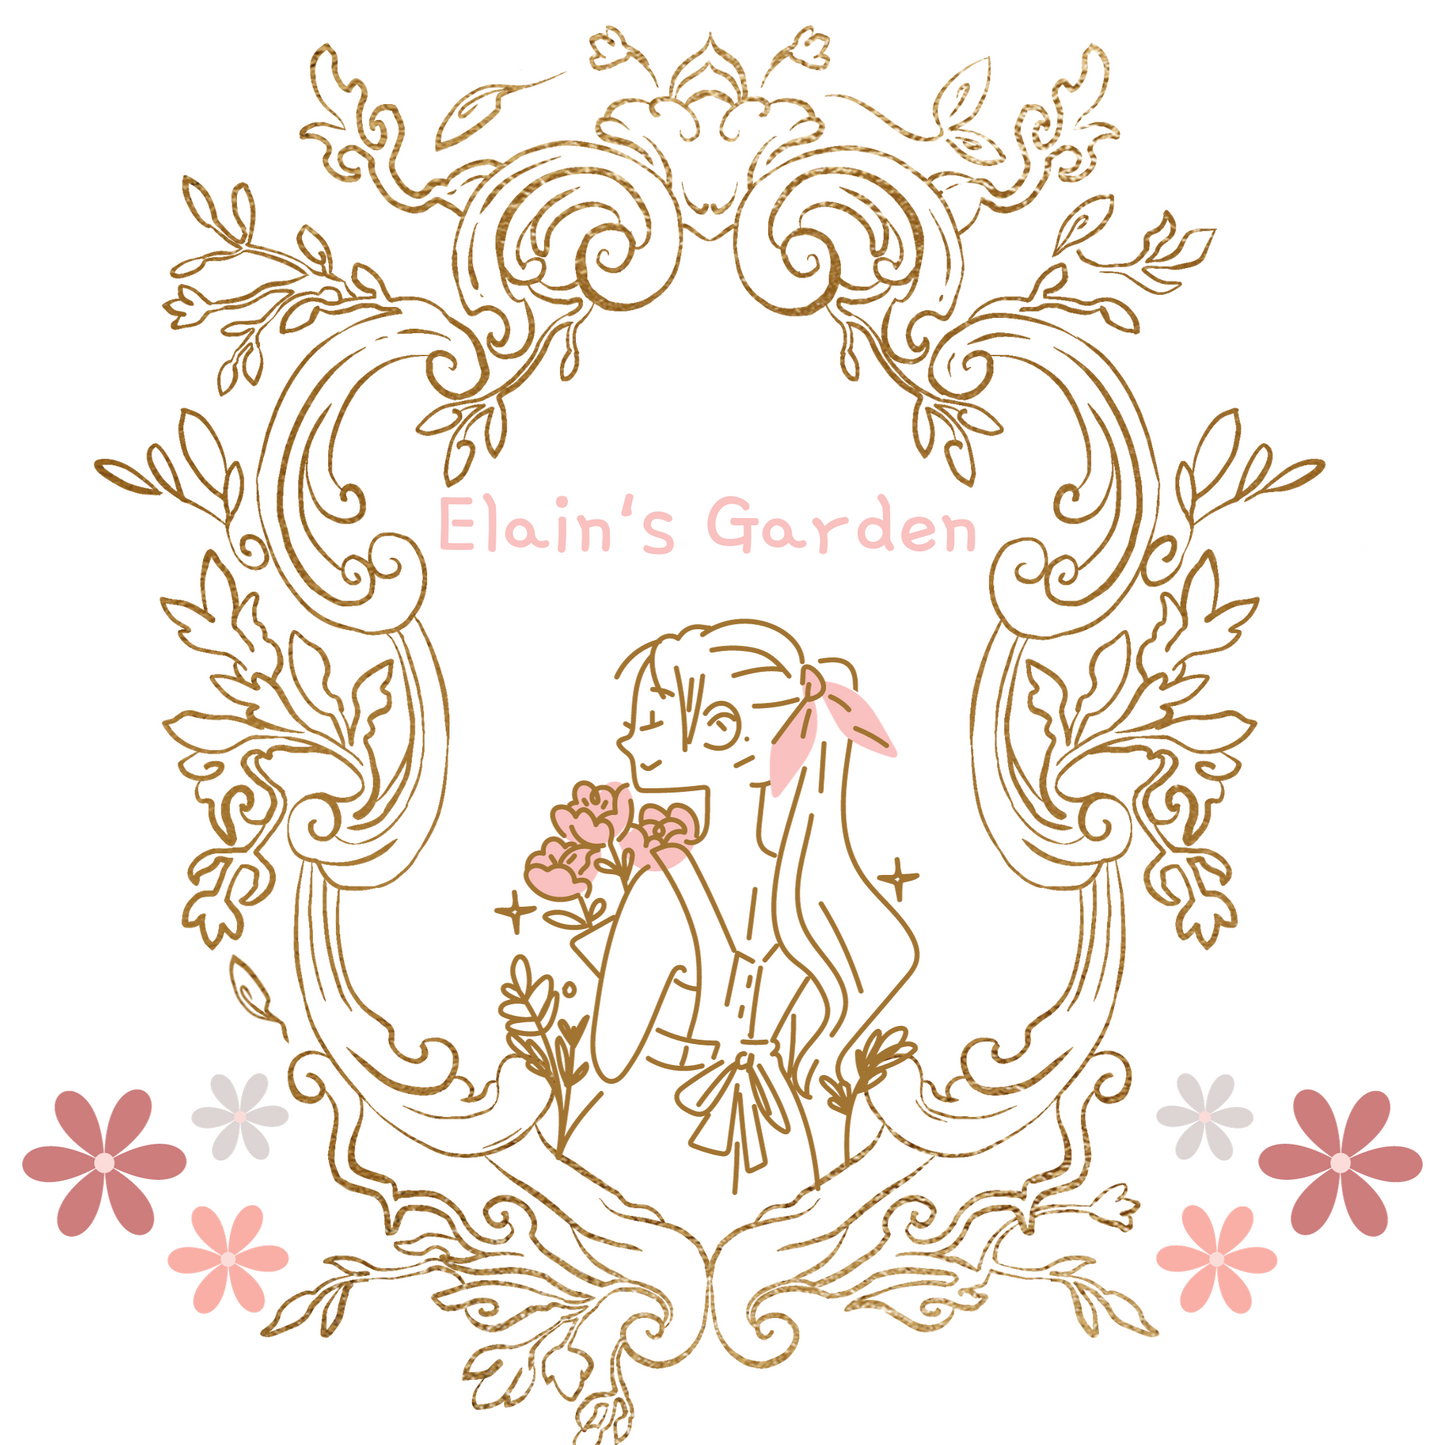 ‘Elain’s Garden’ Tote